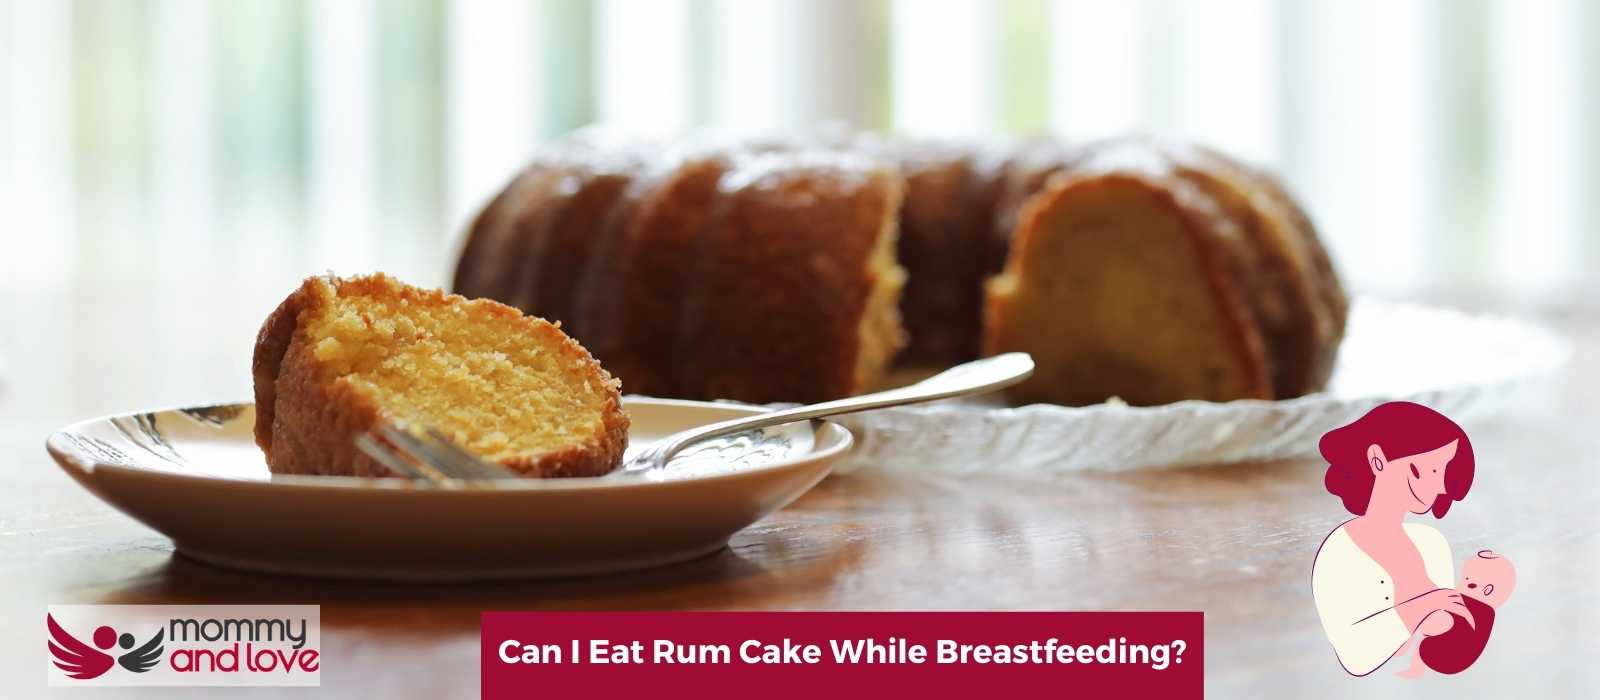 Can I Eat Rum Cake While Breastfeeding